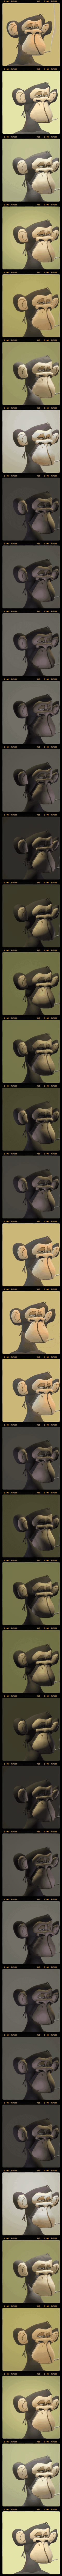 MonkeyPox Patient 0